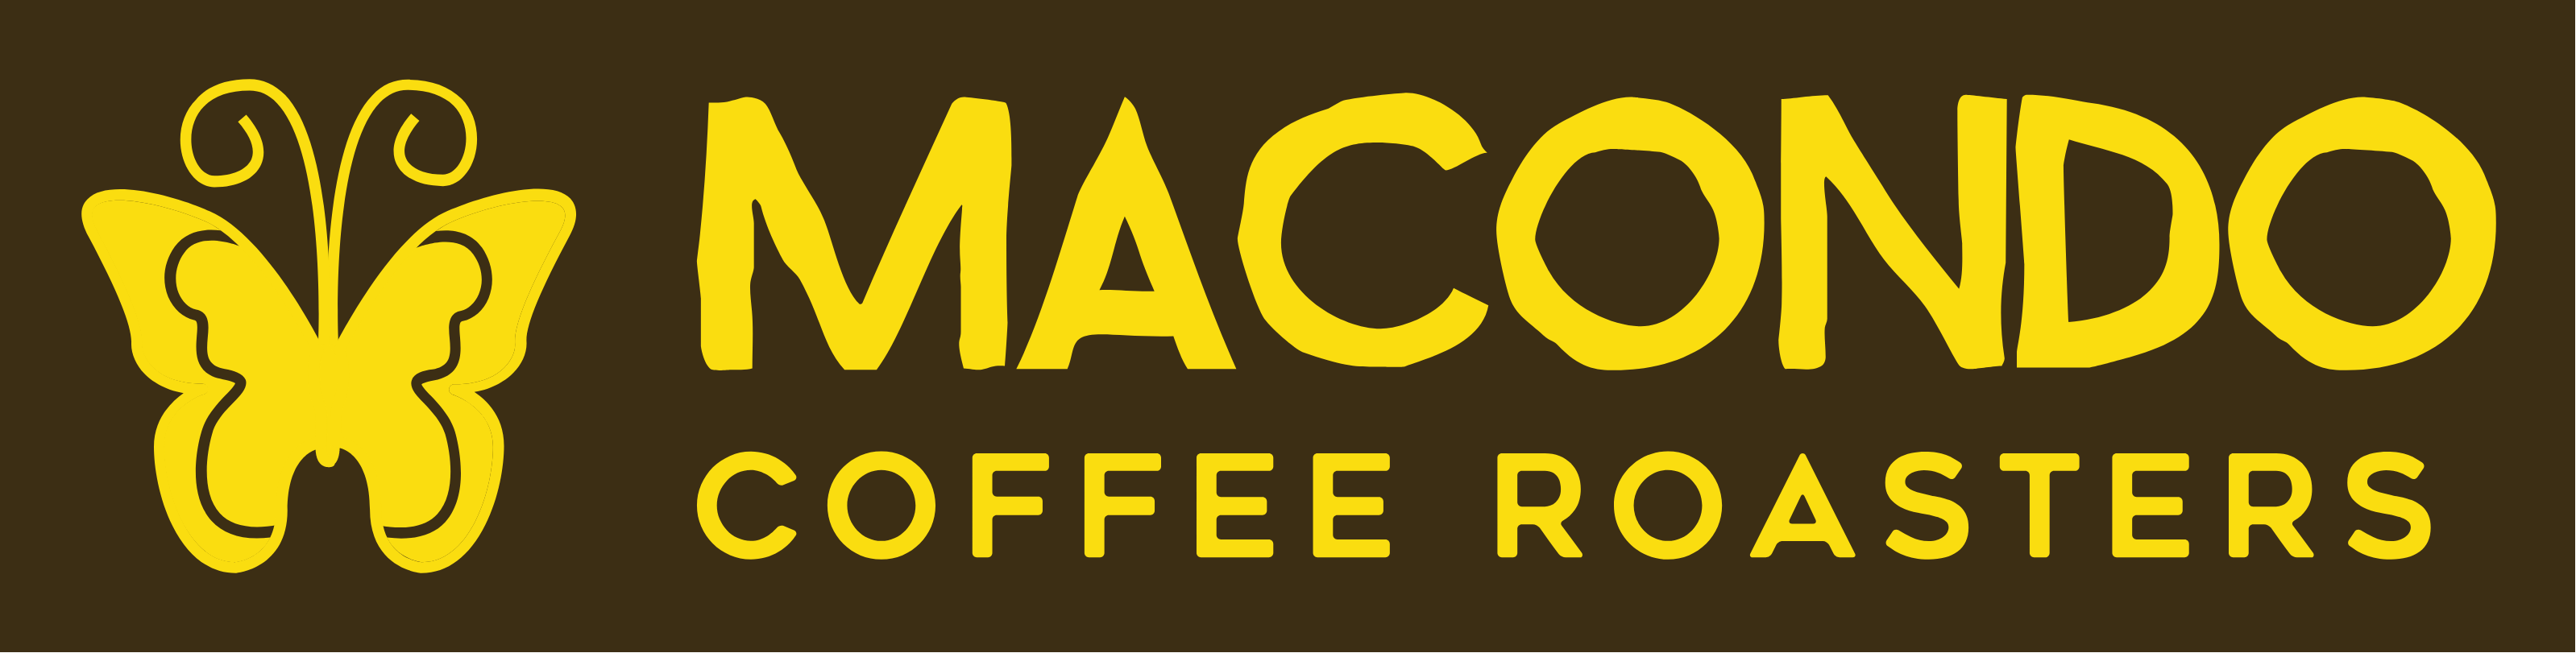 Macondo Coffee Roasters - Kendall